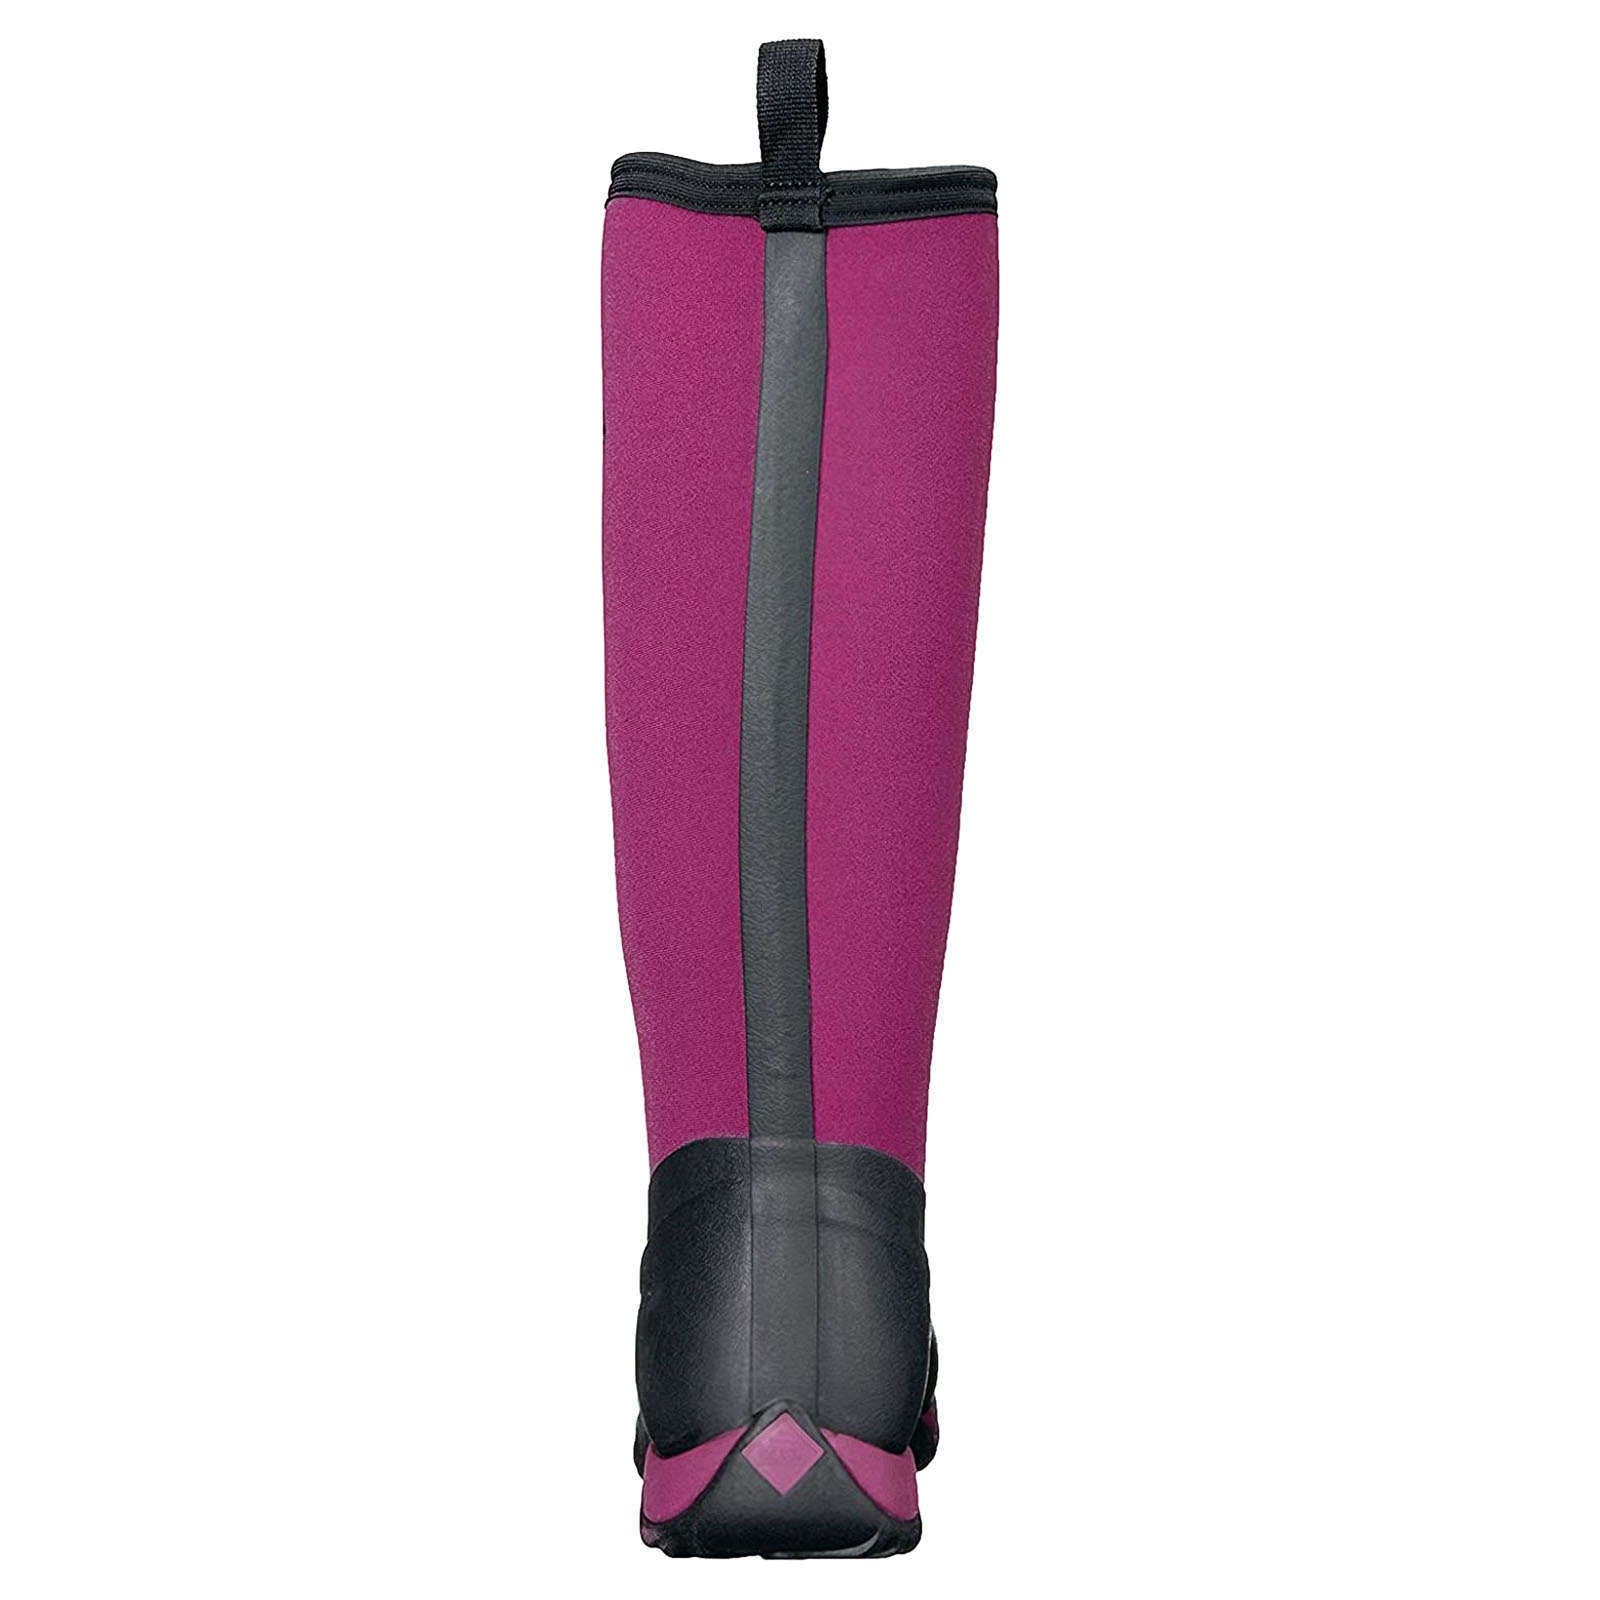 Muck Boot Artic Adventure Waterproof Women's Tall Wellington Boots#color_black maroon